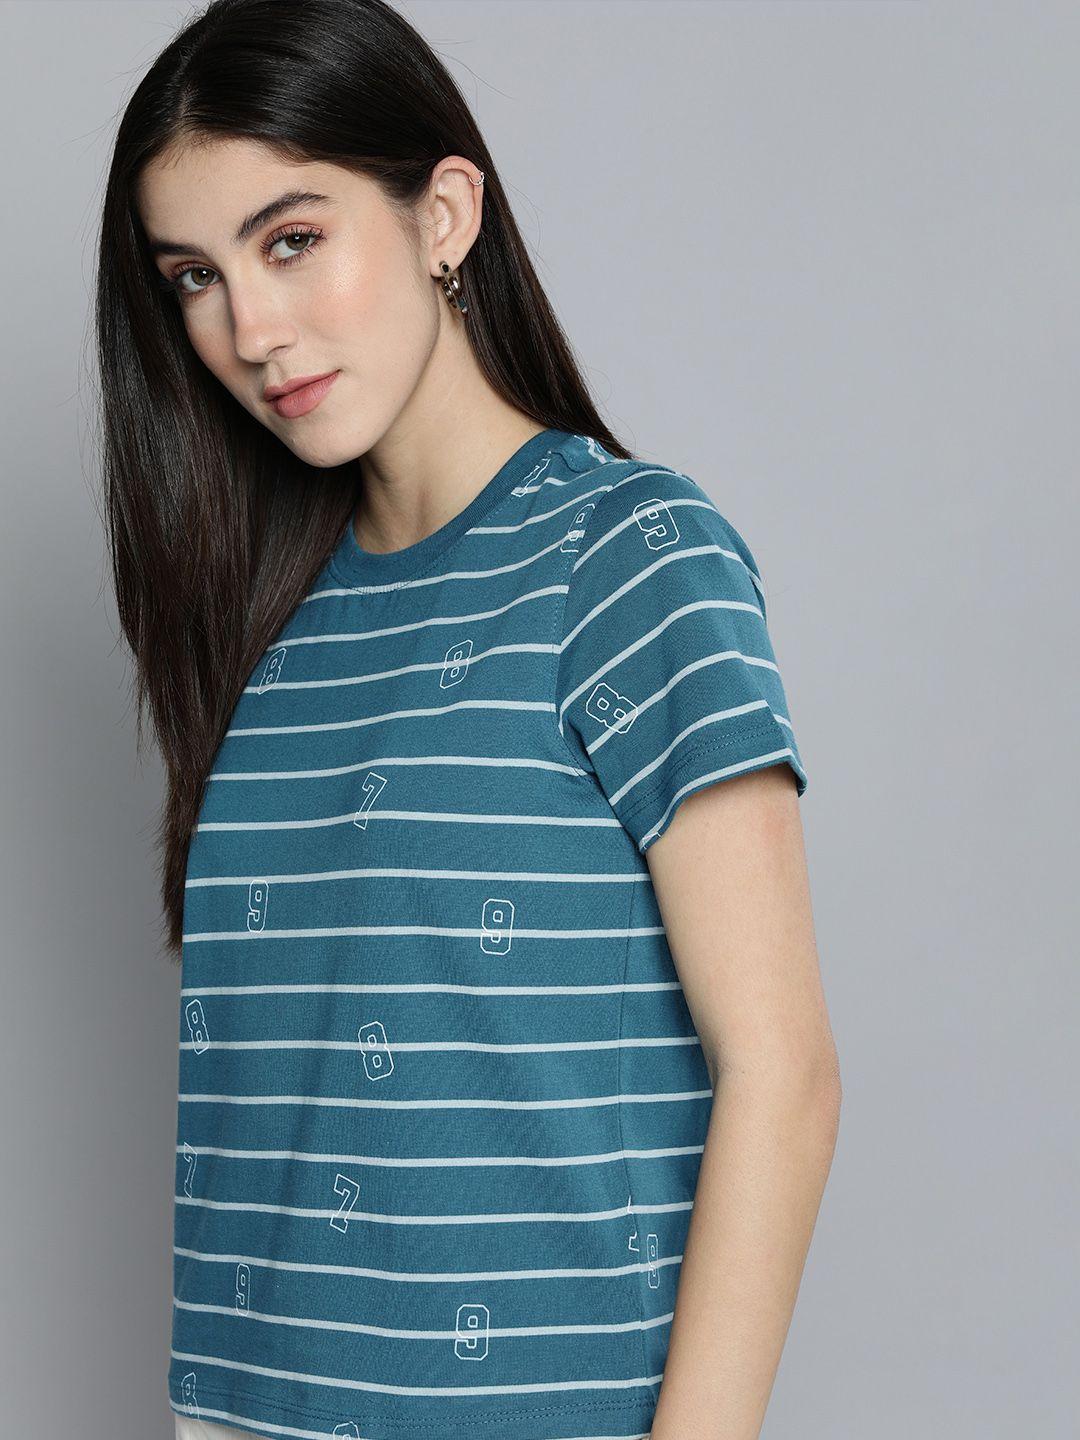 harvard women teal blue striped pure cotton t-shirt